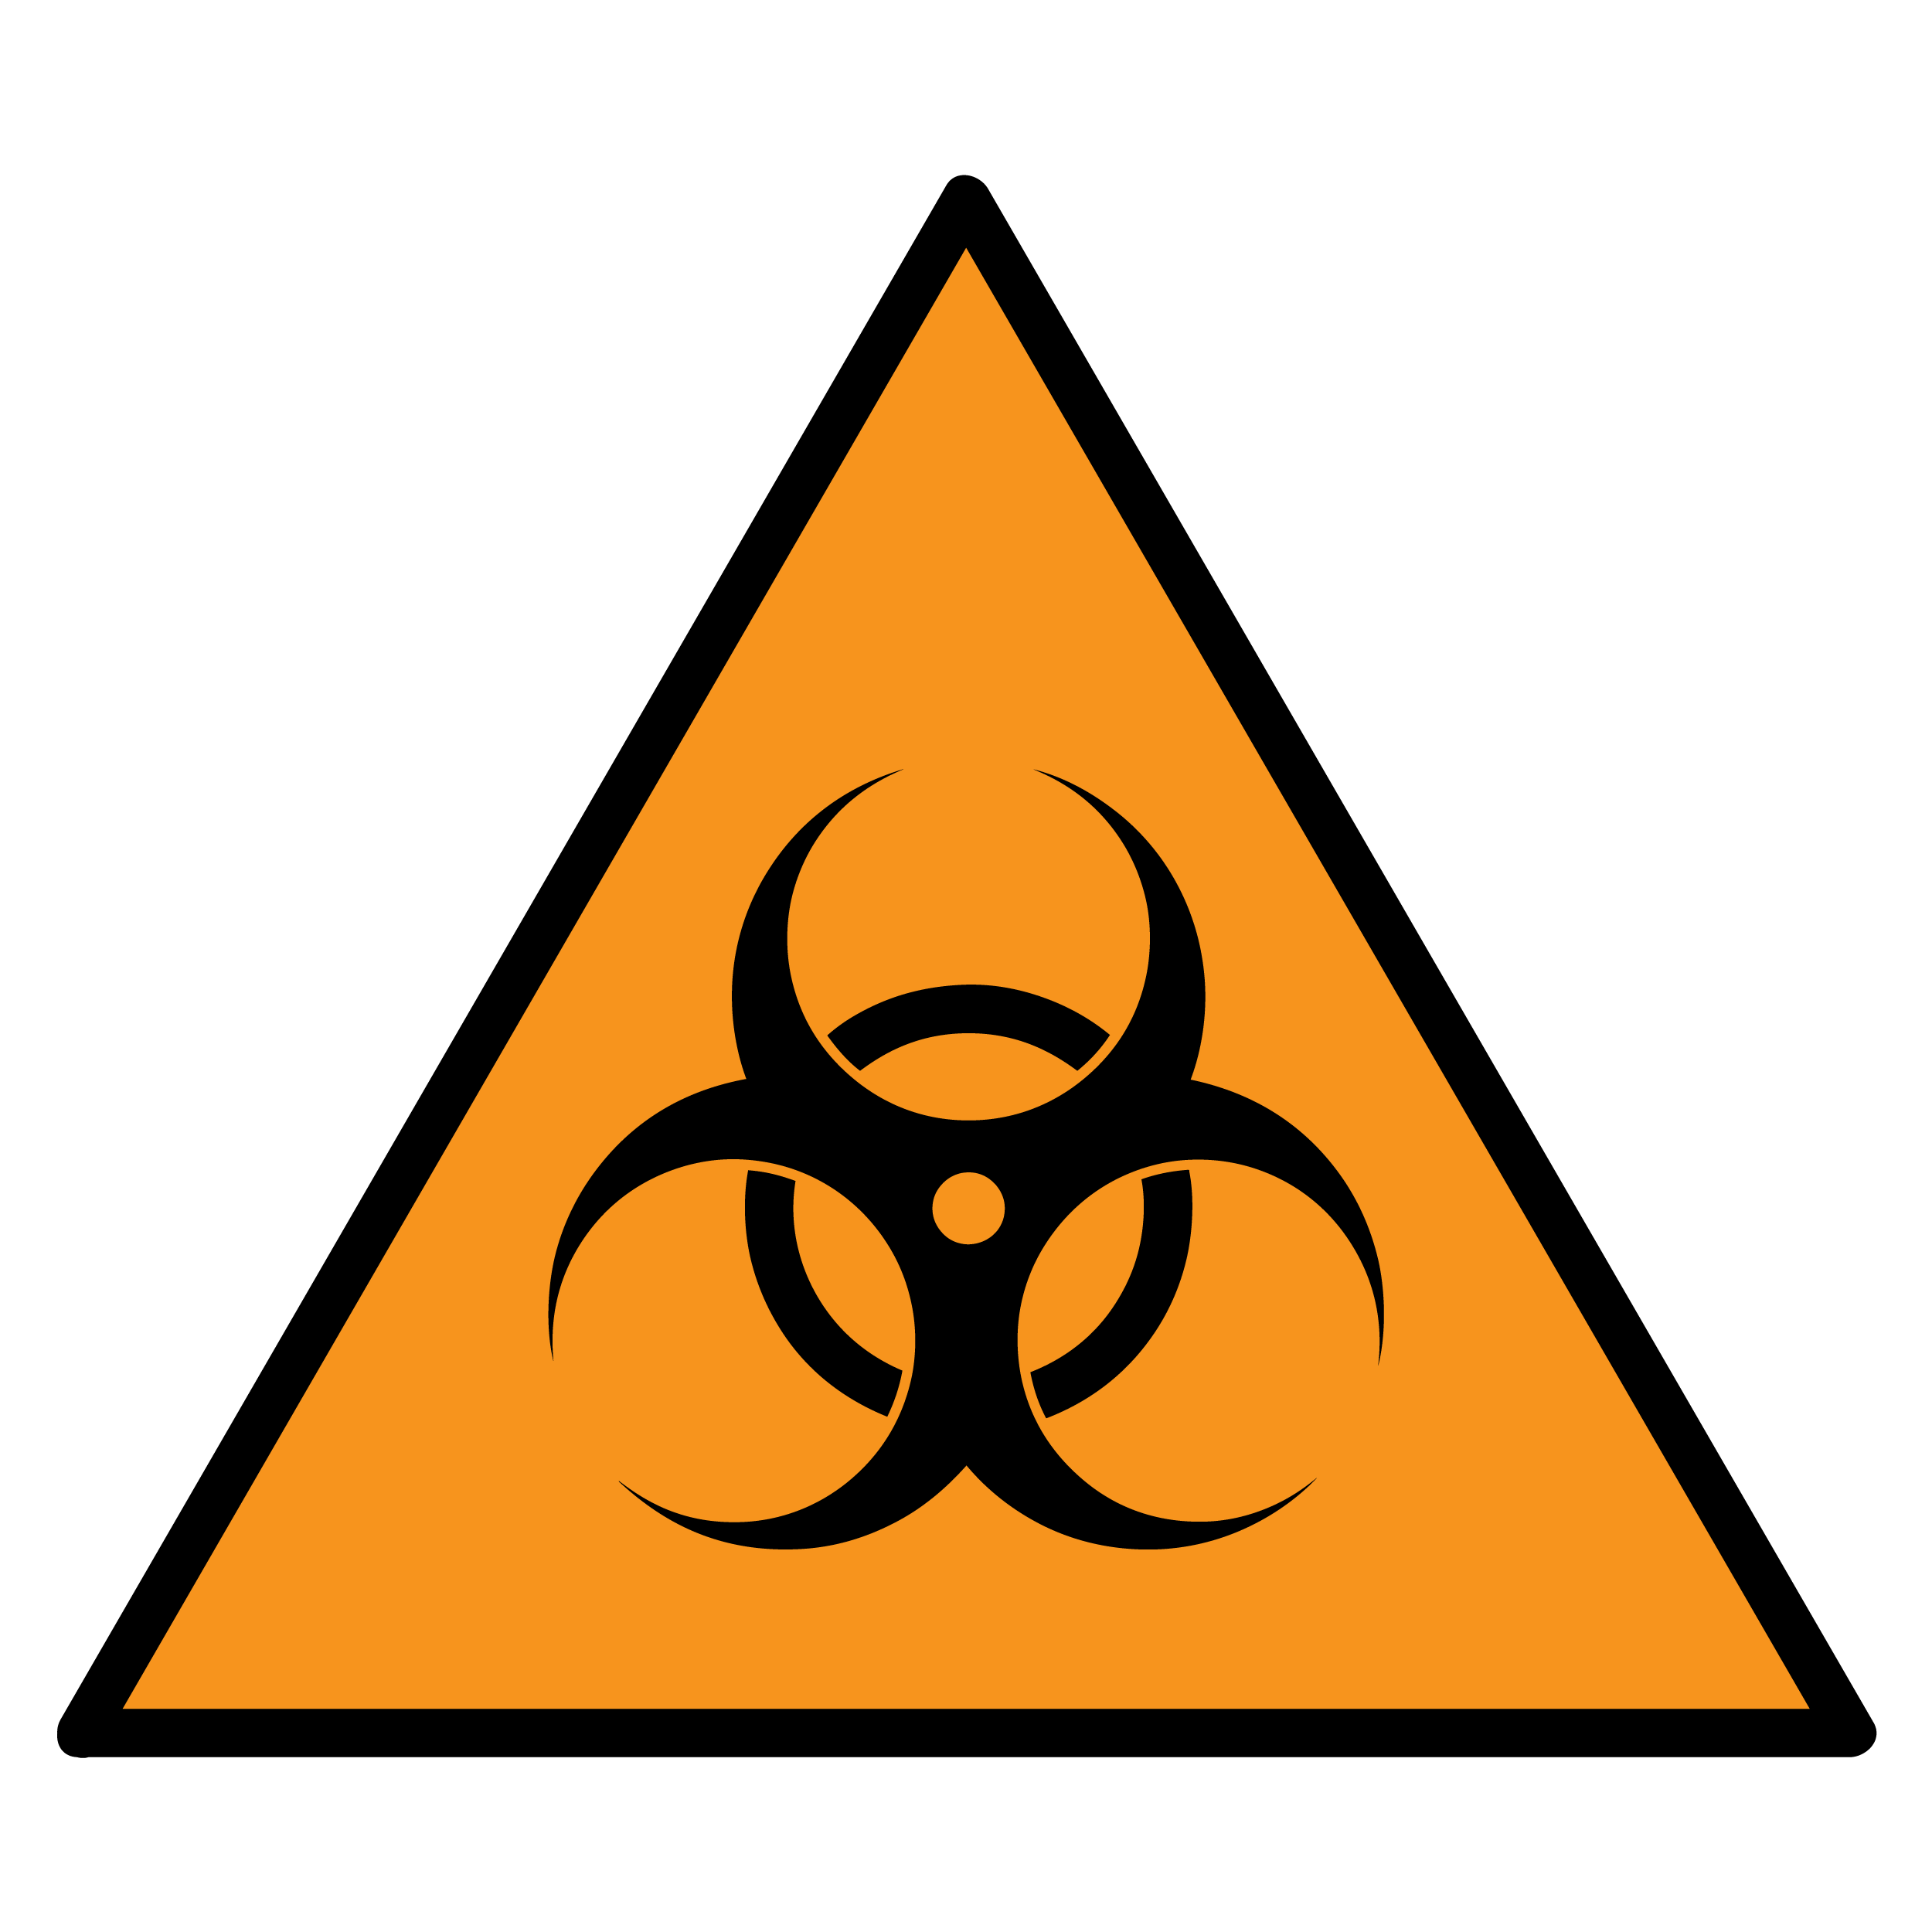 Biological Hazard Symbol Picture Clipart Best